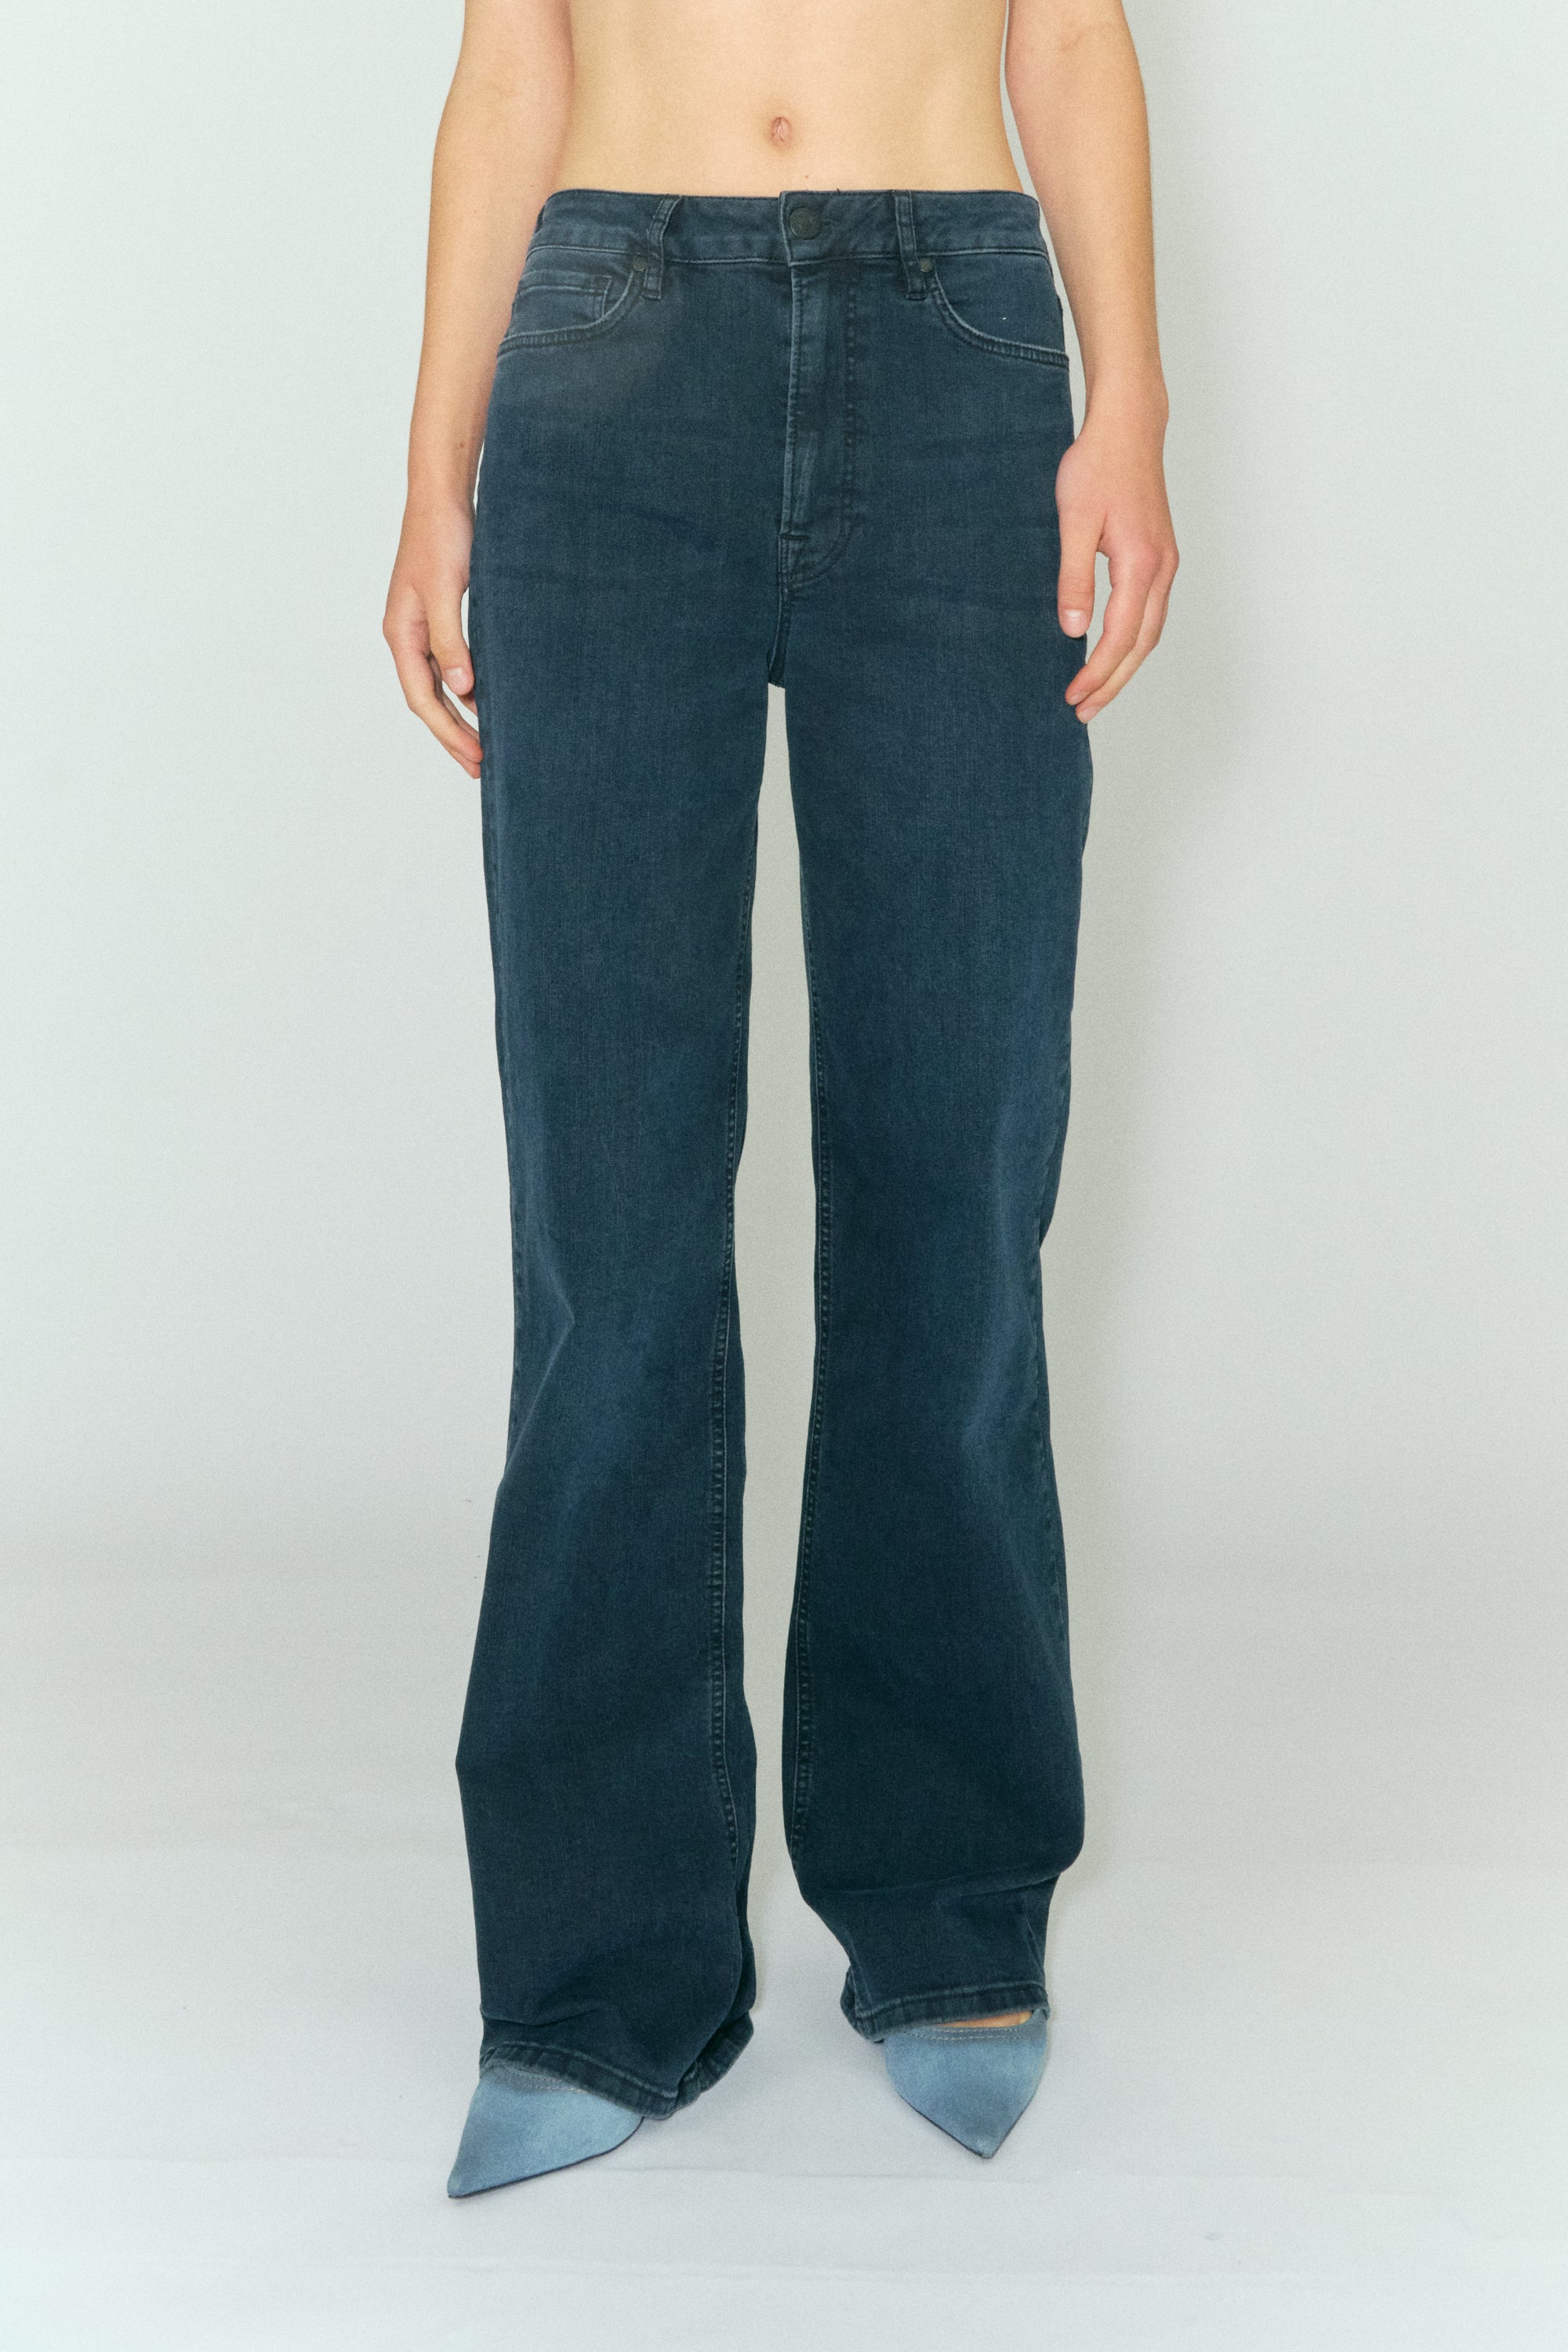 Tomorrow TMRW Brown Jeans - Austin Jeans & Pants 51 Denim Blue